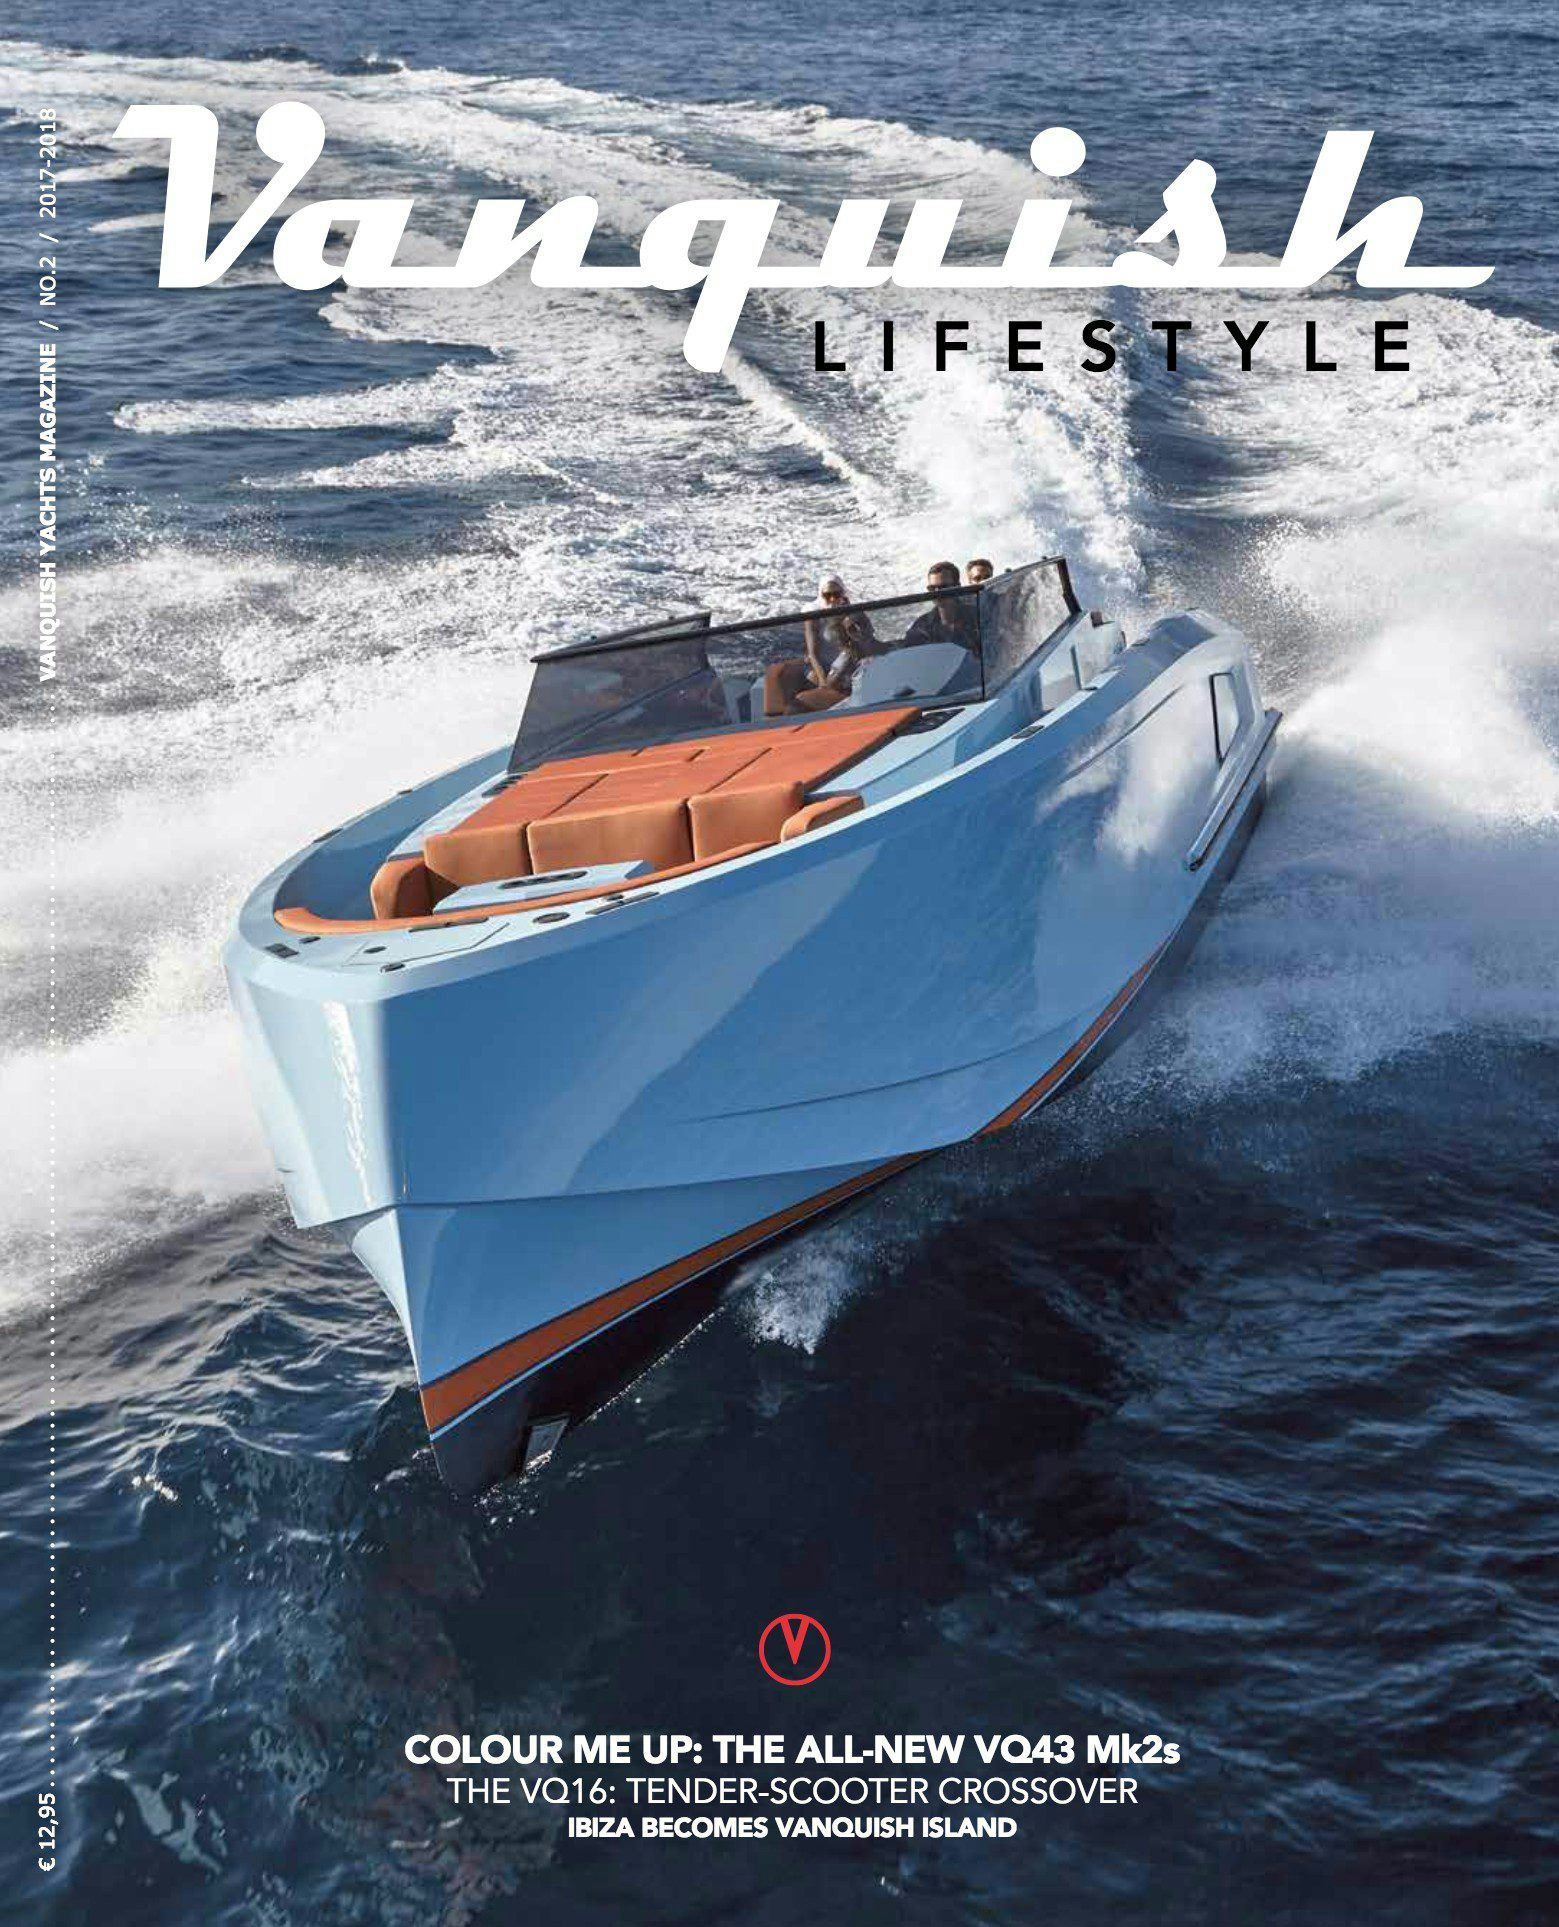 Vanquish lifestyle magazine cover 2017/2018